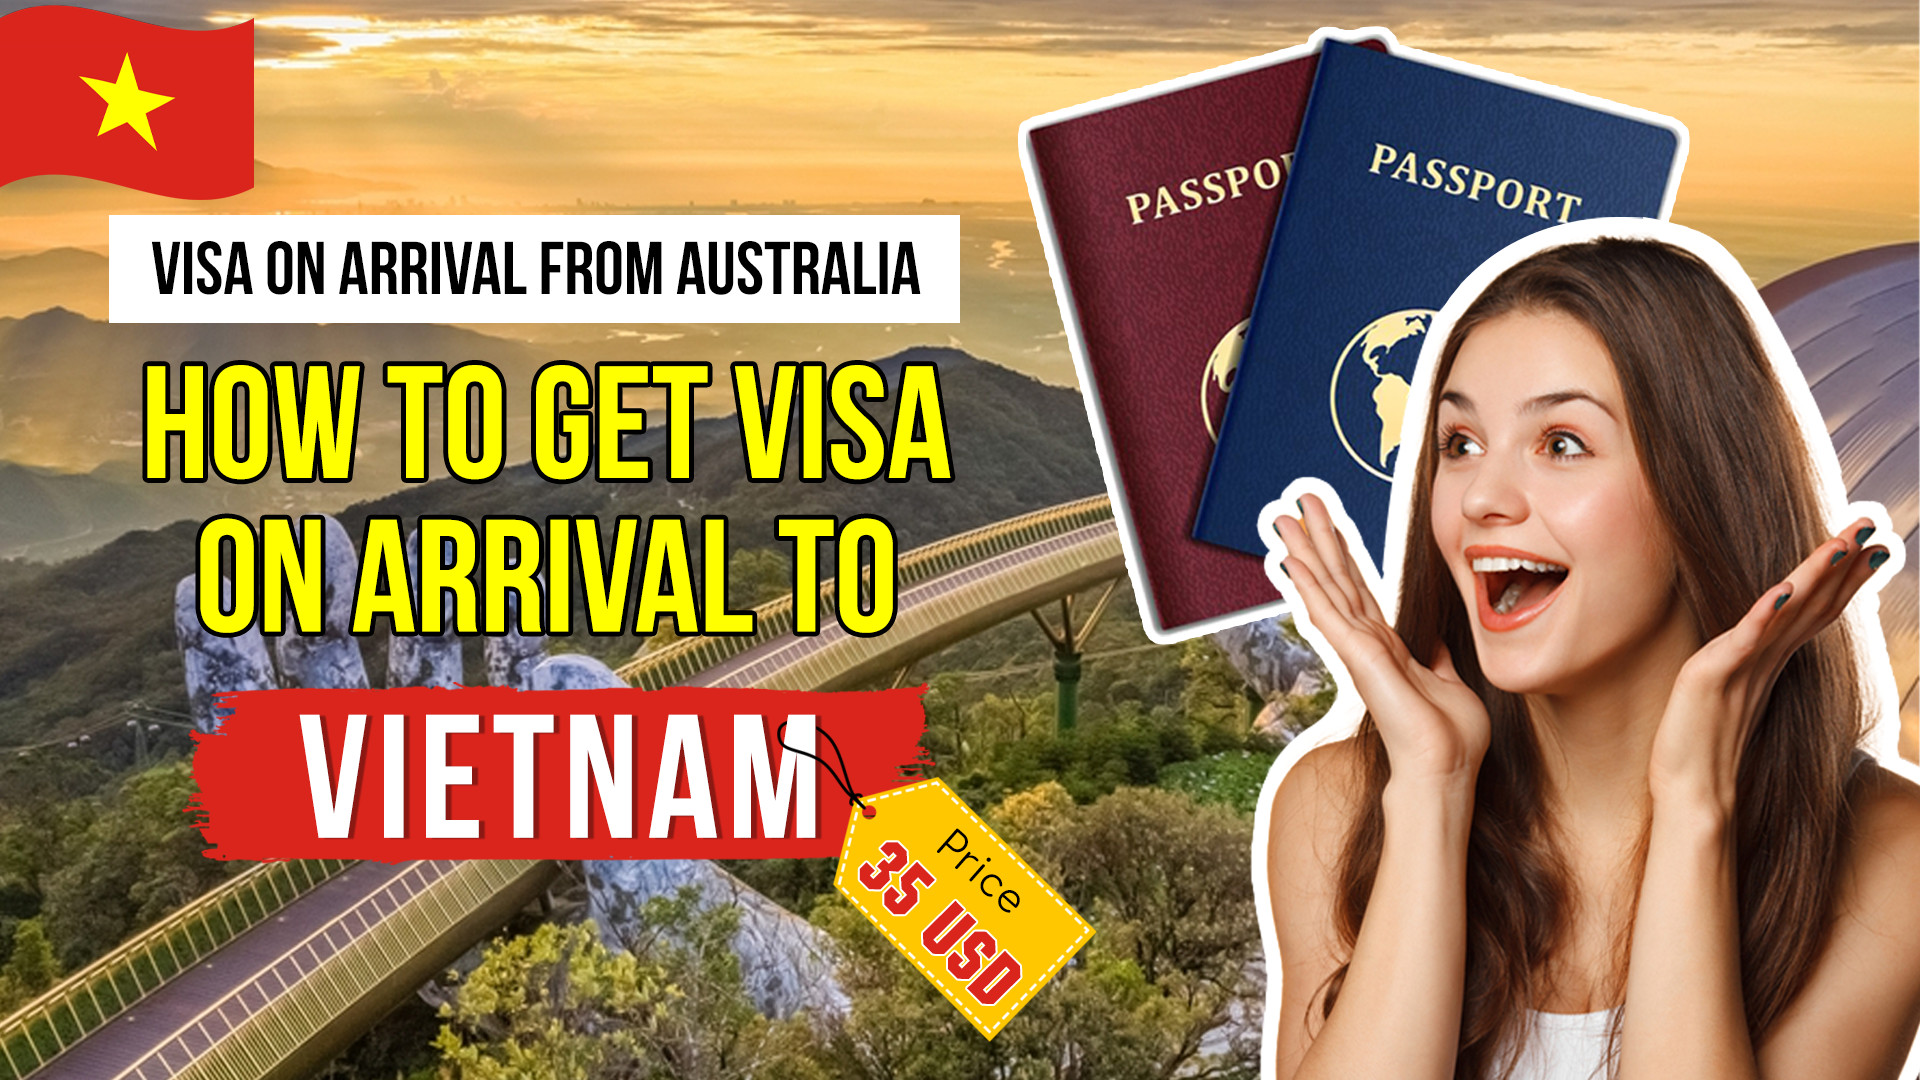 30 days Vietnam Tourist Visa - Why not?